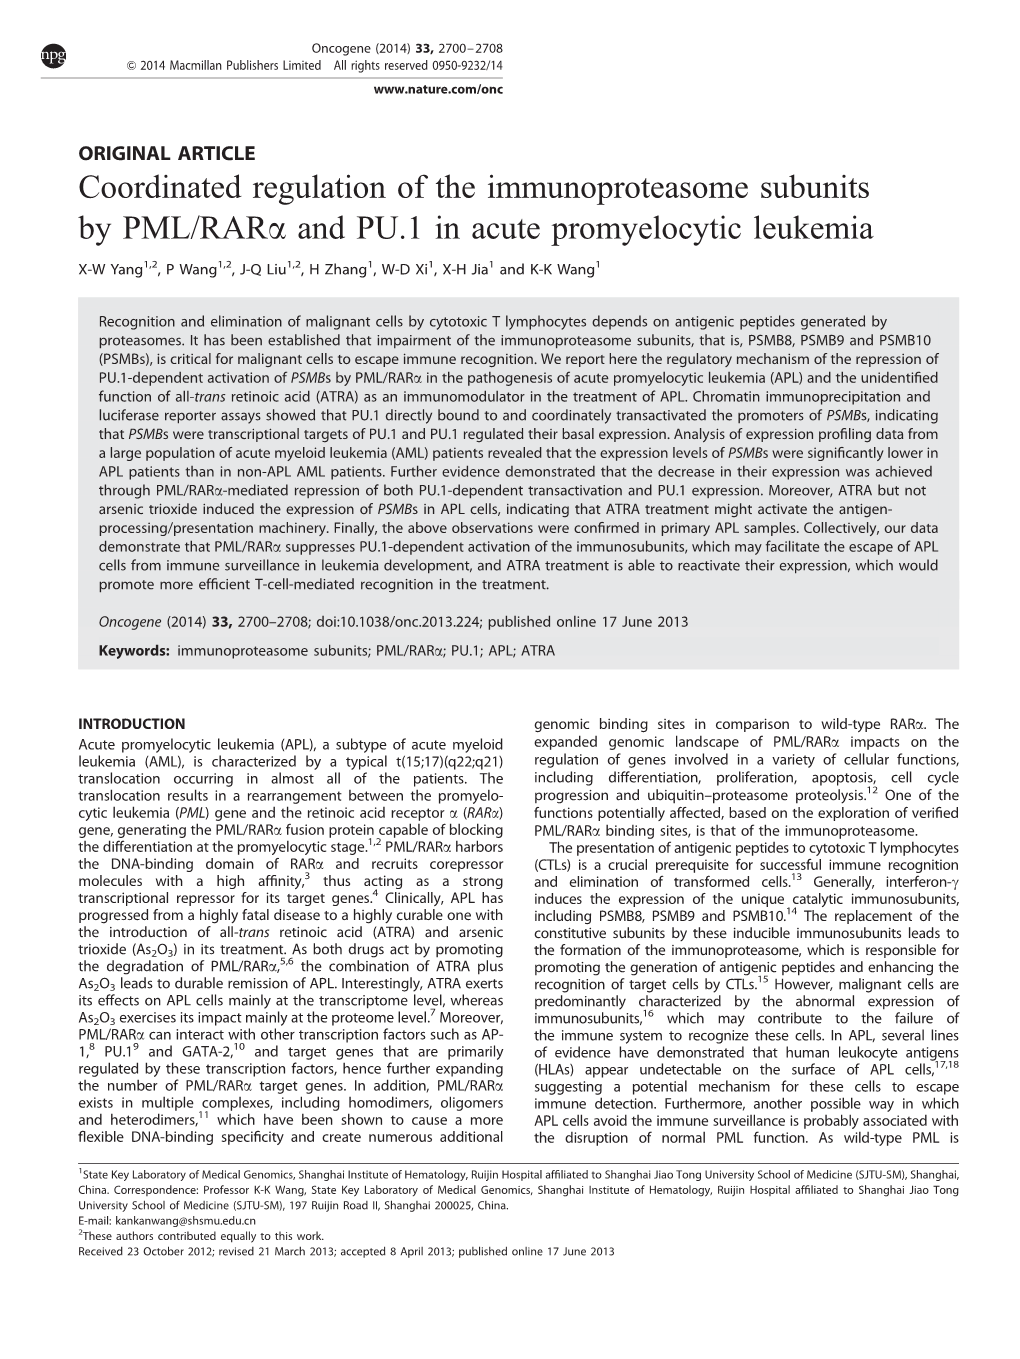 Coordinated Regulation of the Immunoproteasome Subunits by PML/Rara and PU.1 in Acute Promyelocytic Leukemia